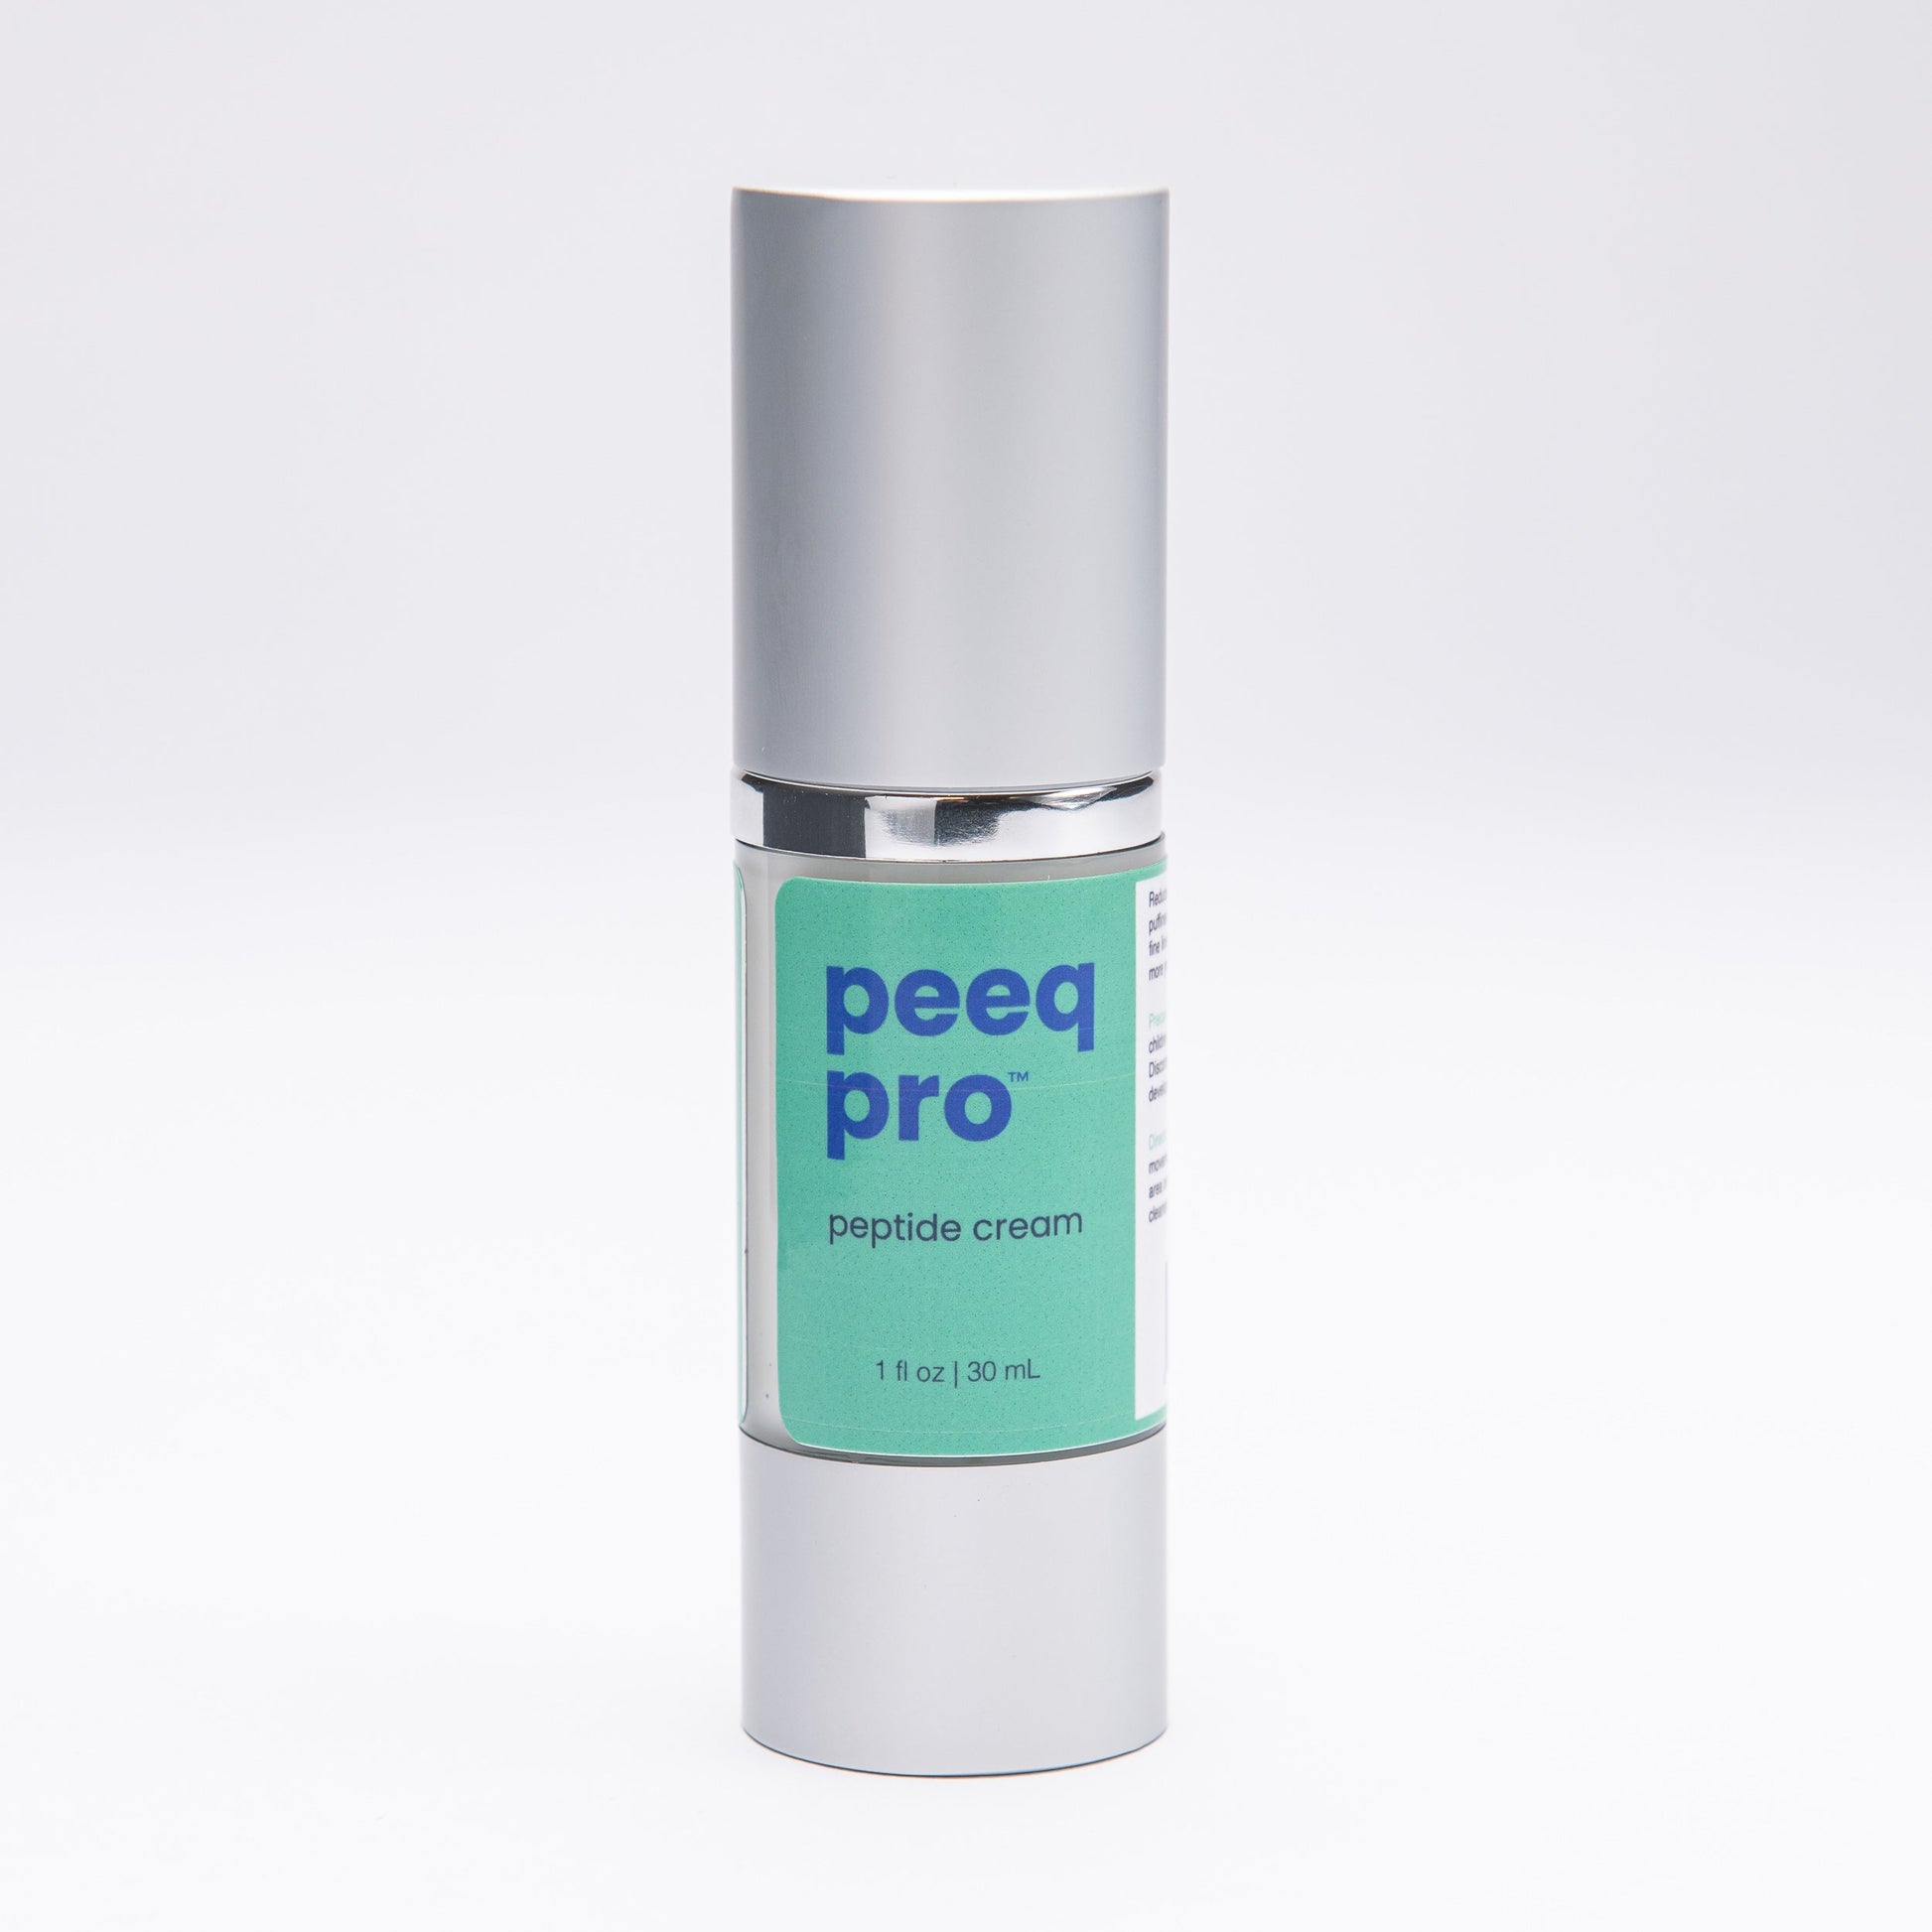 Peeq Pro Peptide Cream bottle